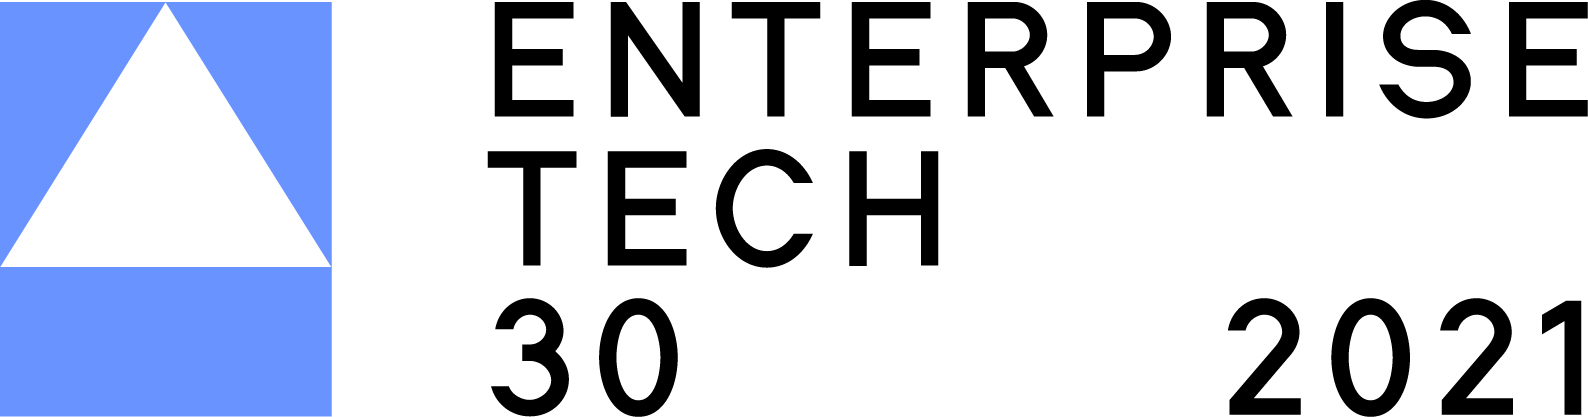 enterprisetech30-horizontal-2021-logo-full-color-rgb